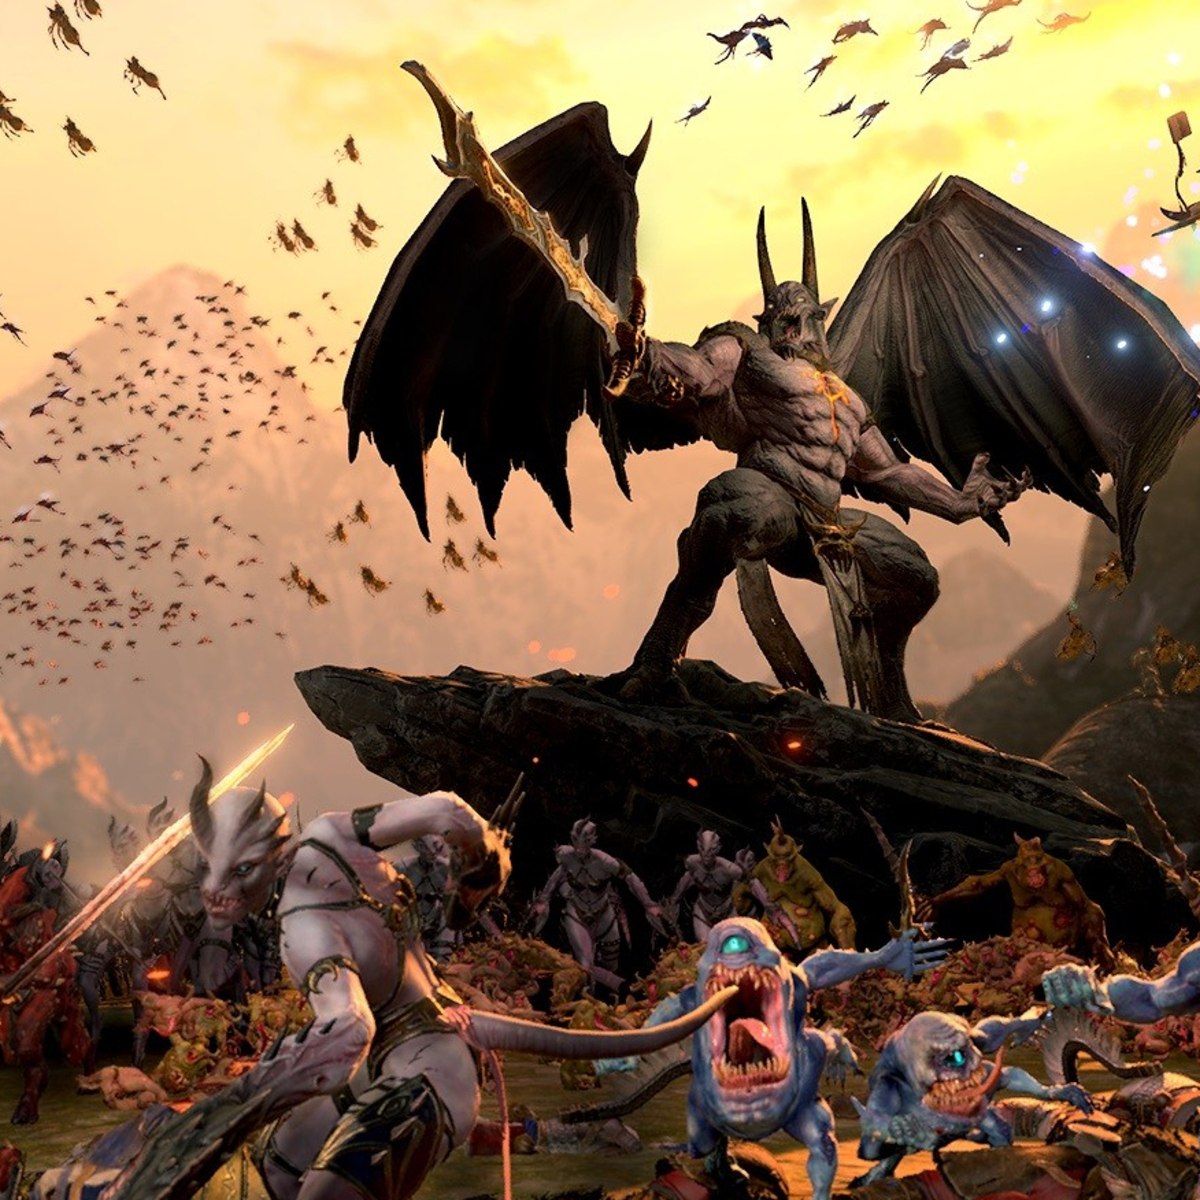 Monster of Total War Warhammer II Wallpapers